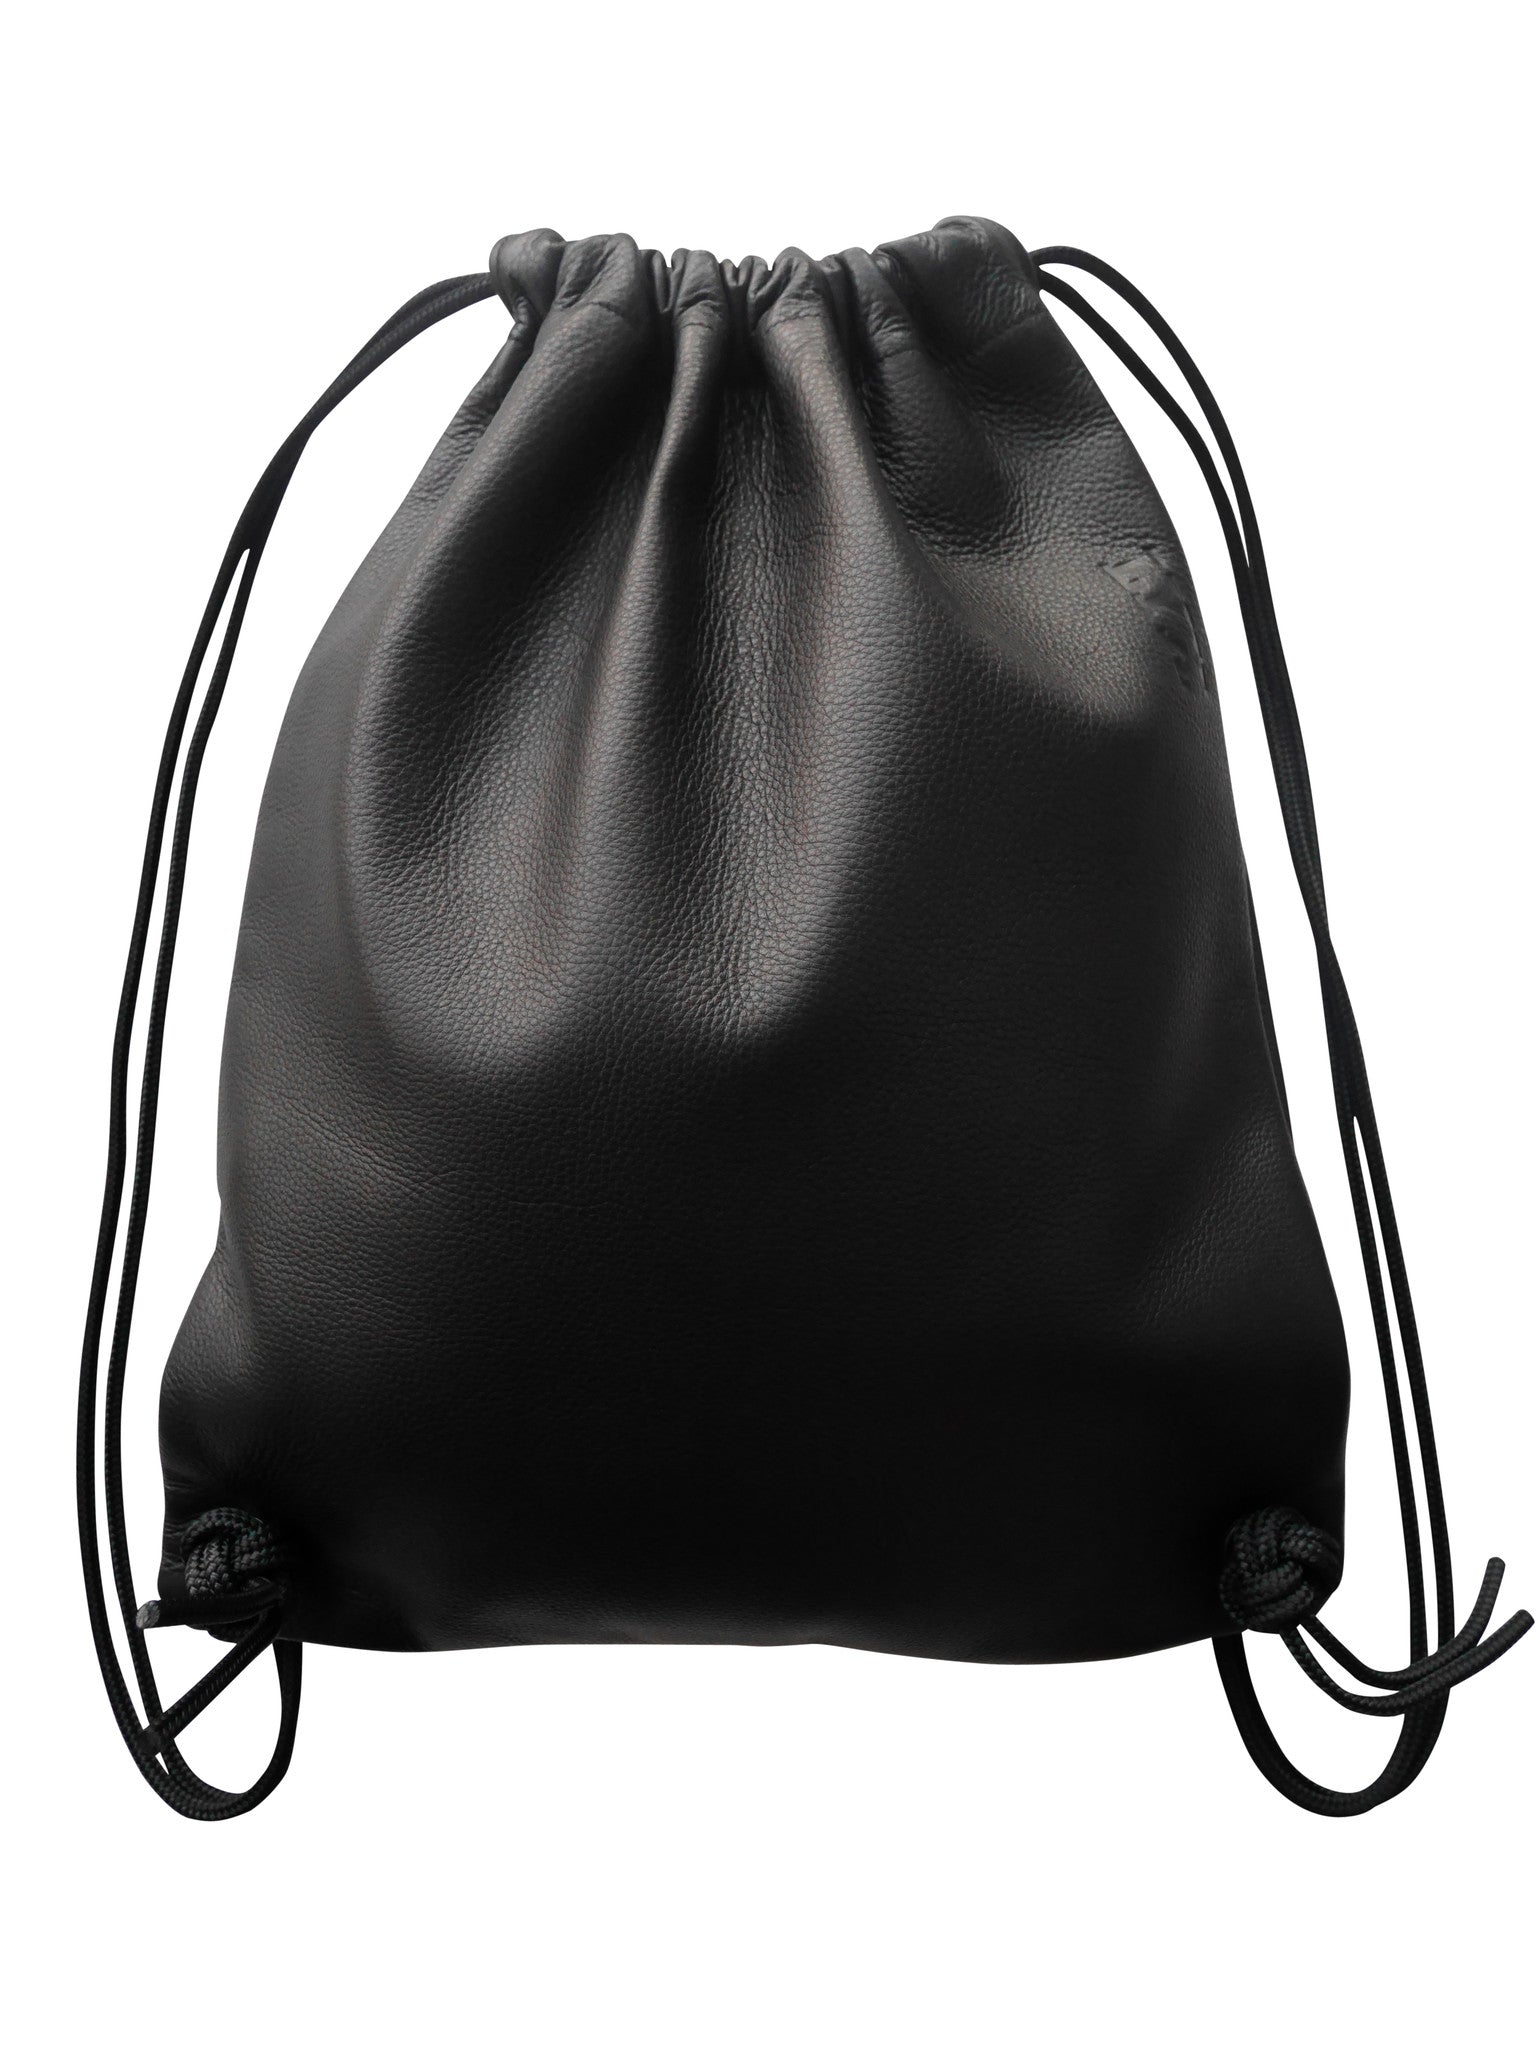 Oysterman drawstring bag in black - LYX leather